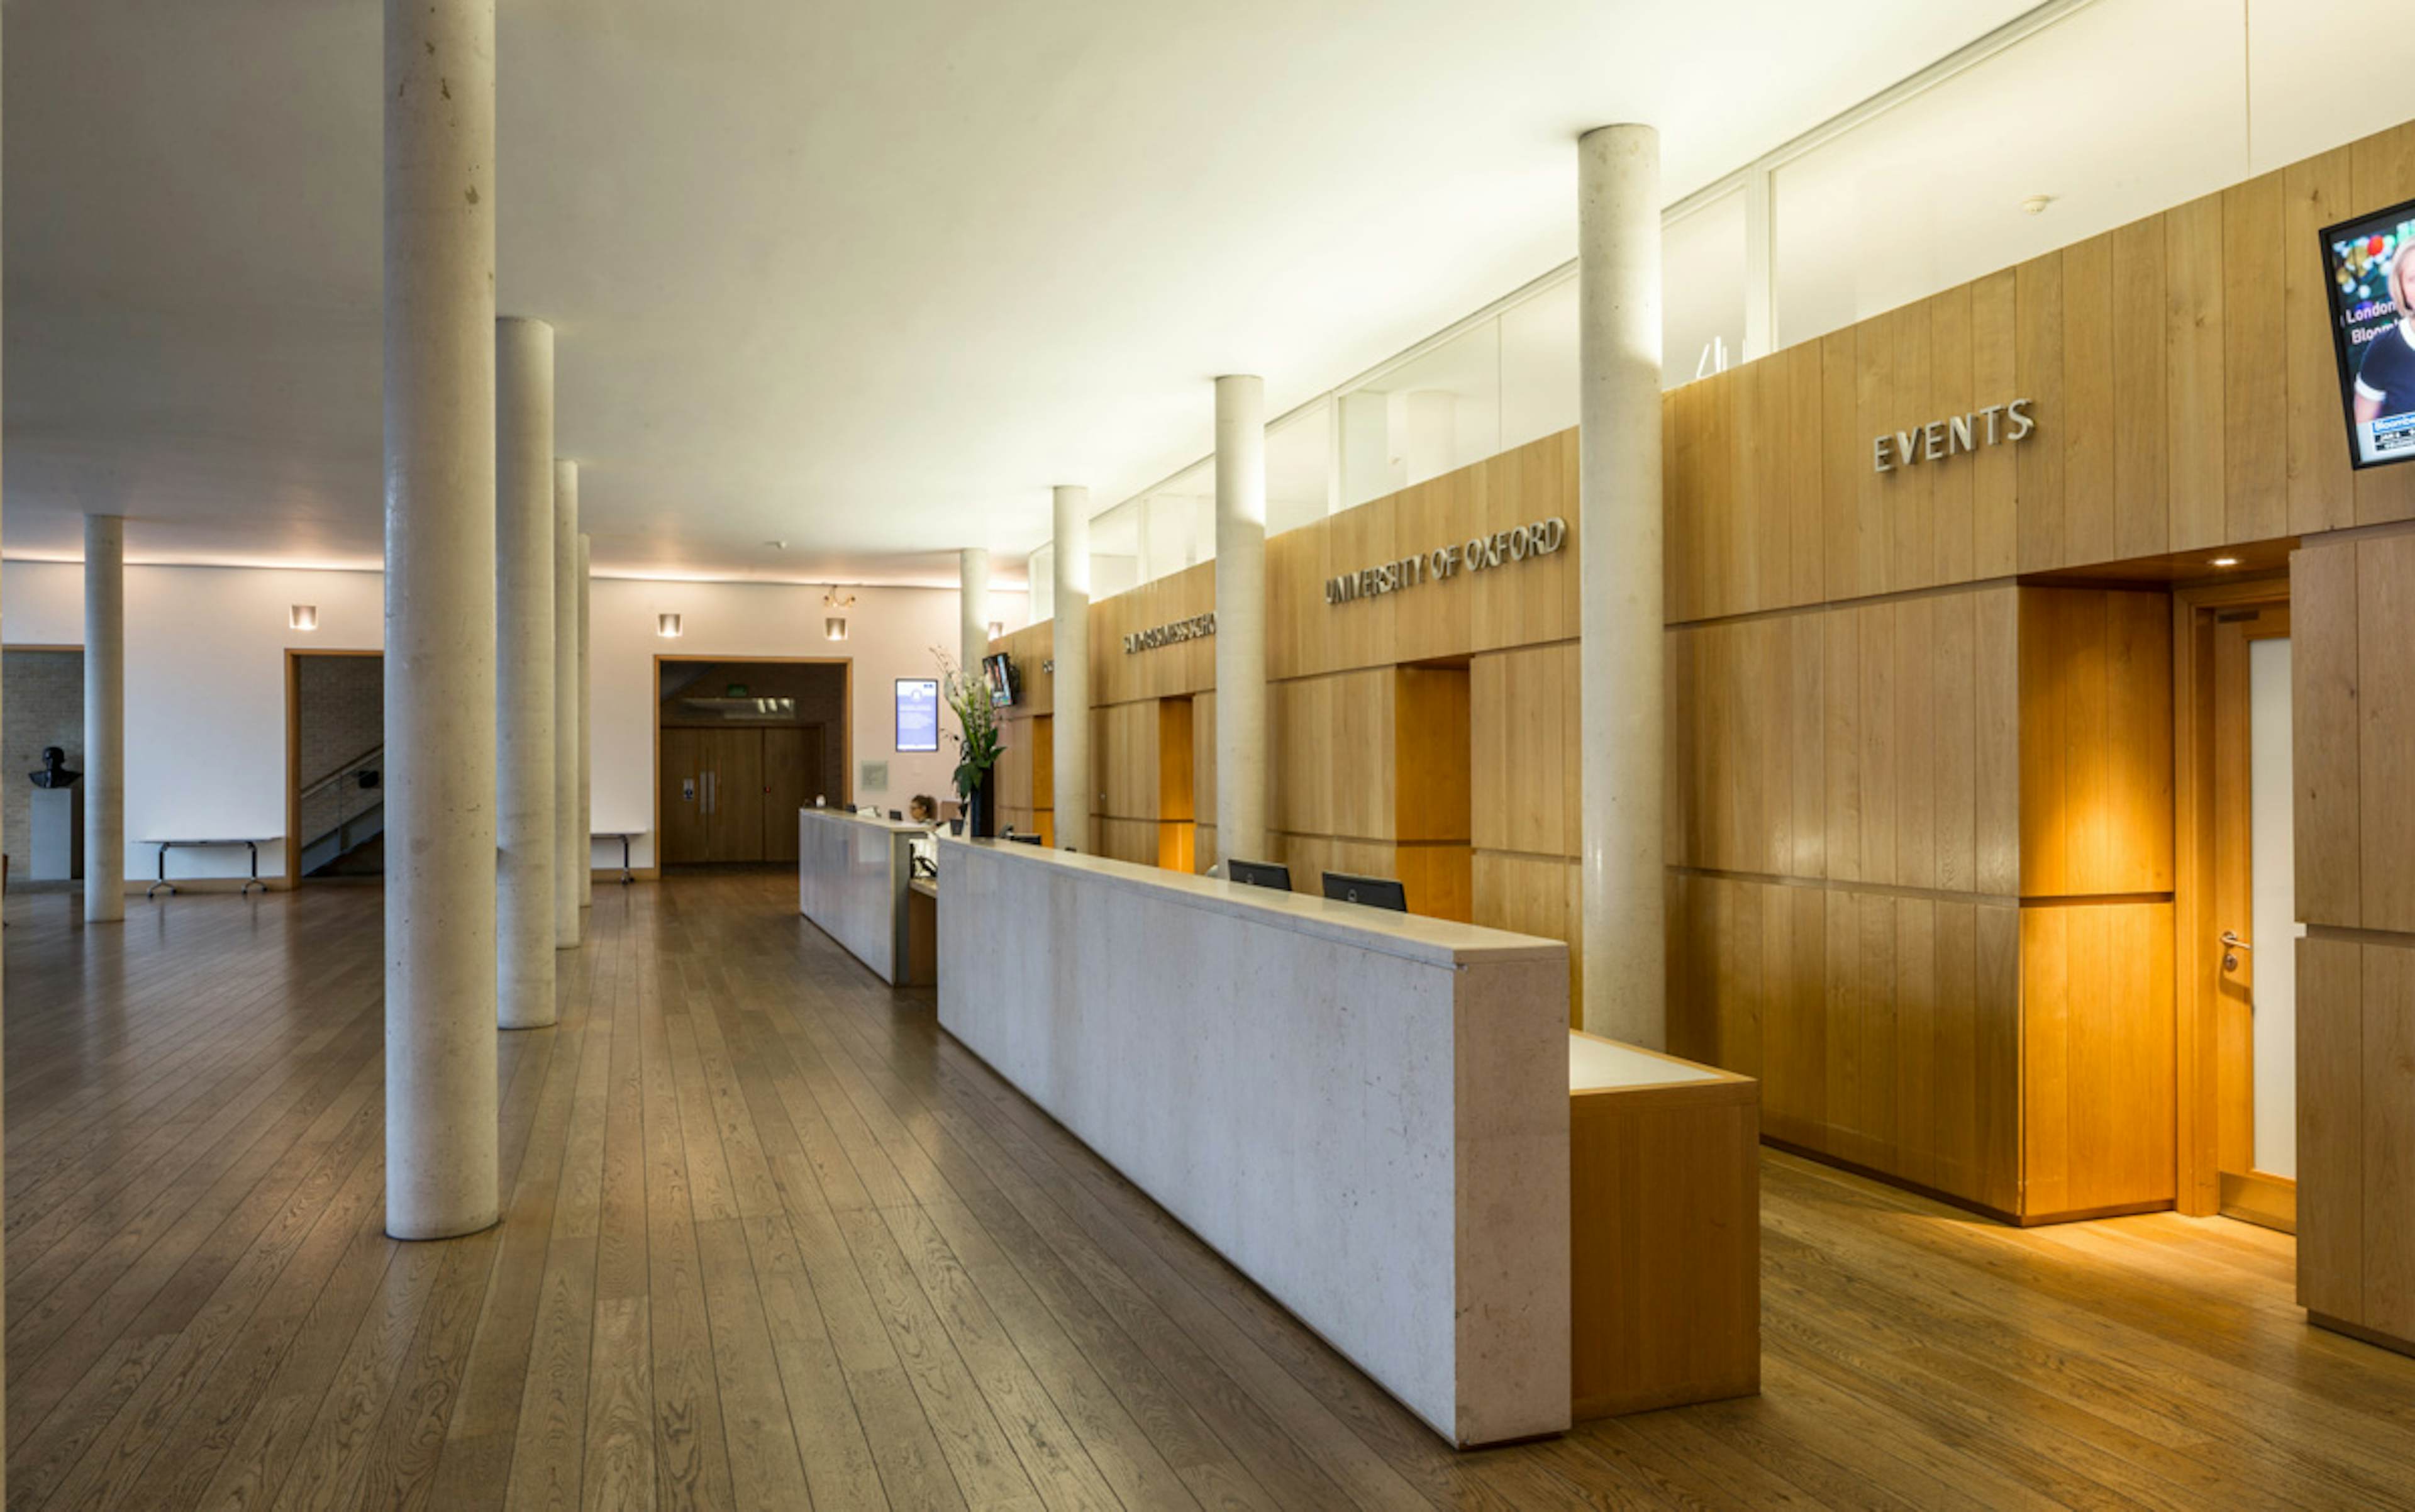 Park End Street Venue, Saïd Business School, University of Oxford - Entrance Hall image 1